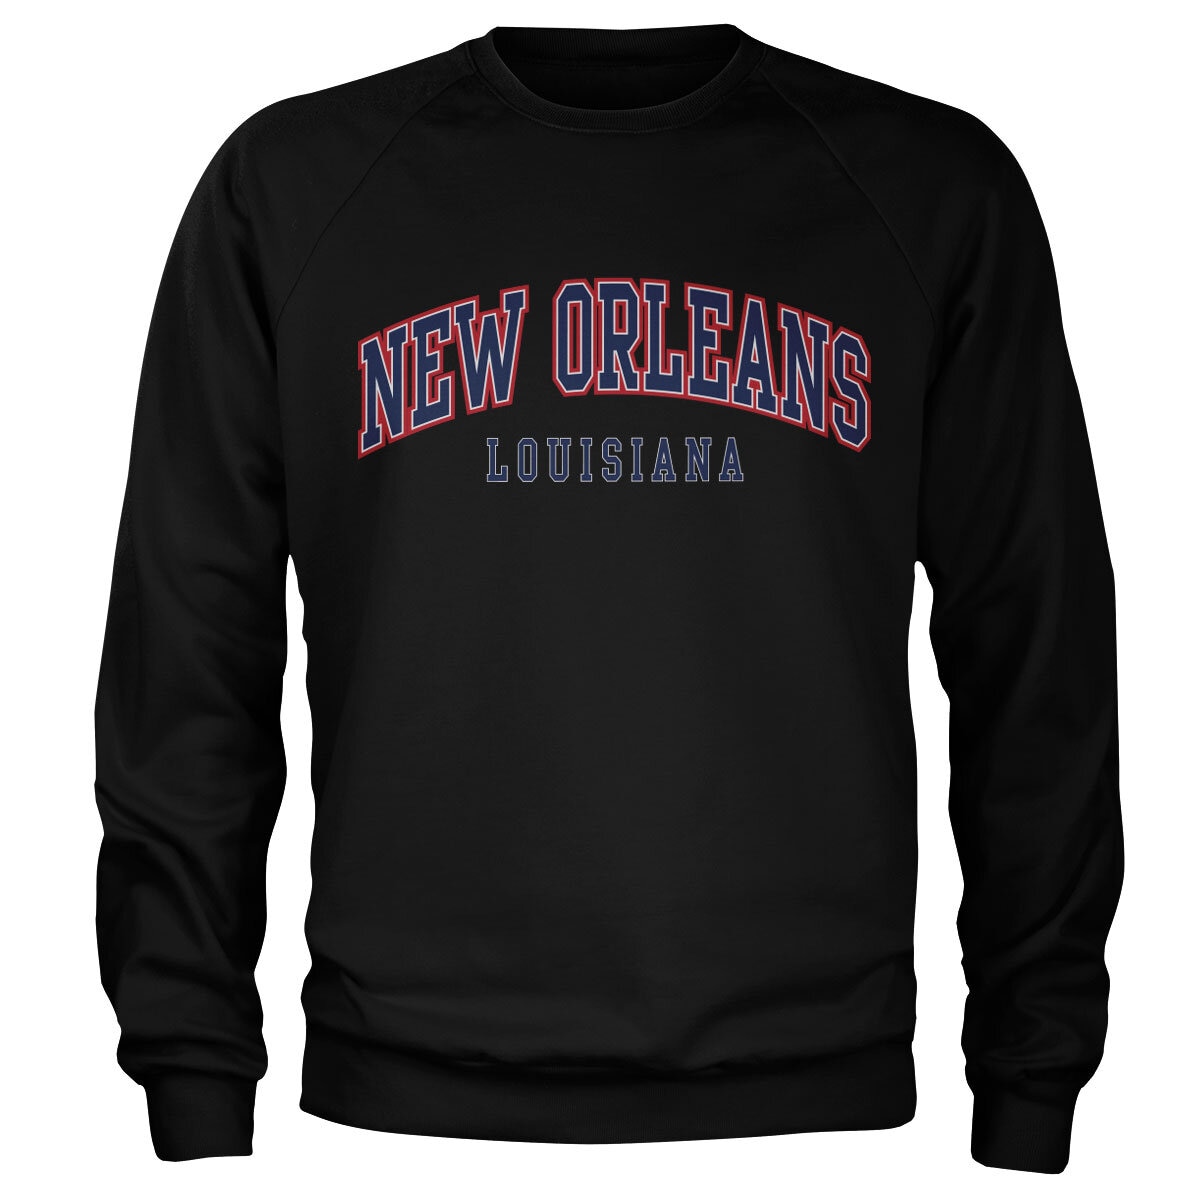 New Orleans - Louisiana Sweatshirt